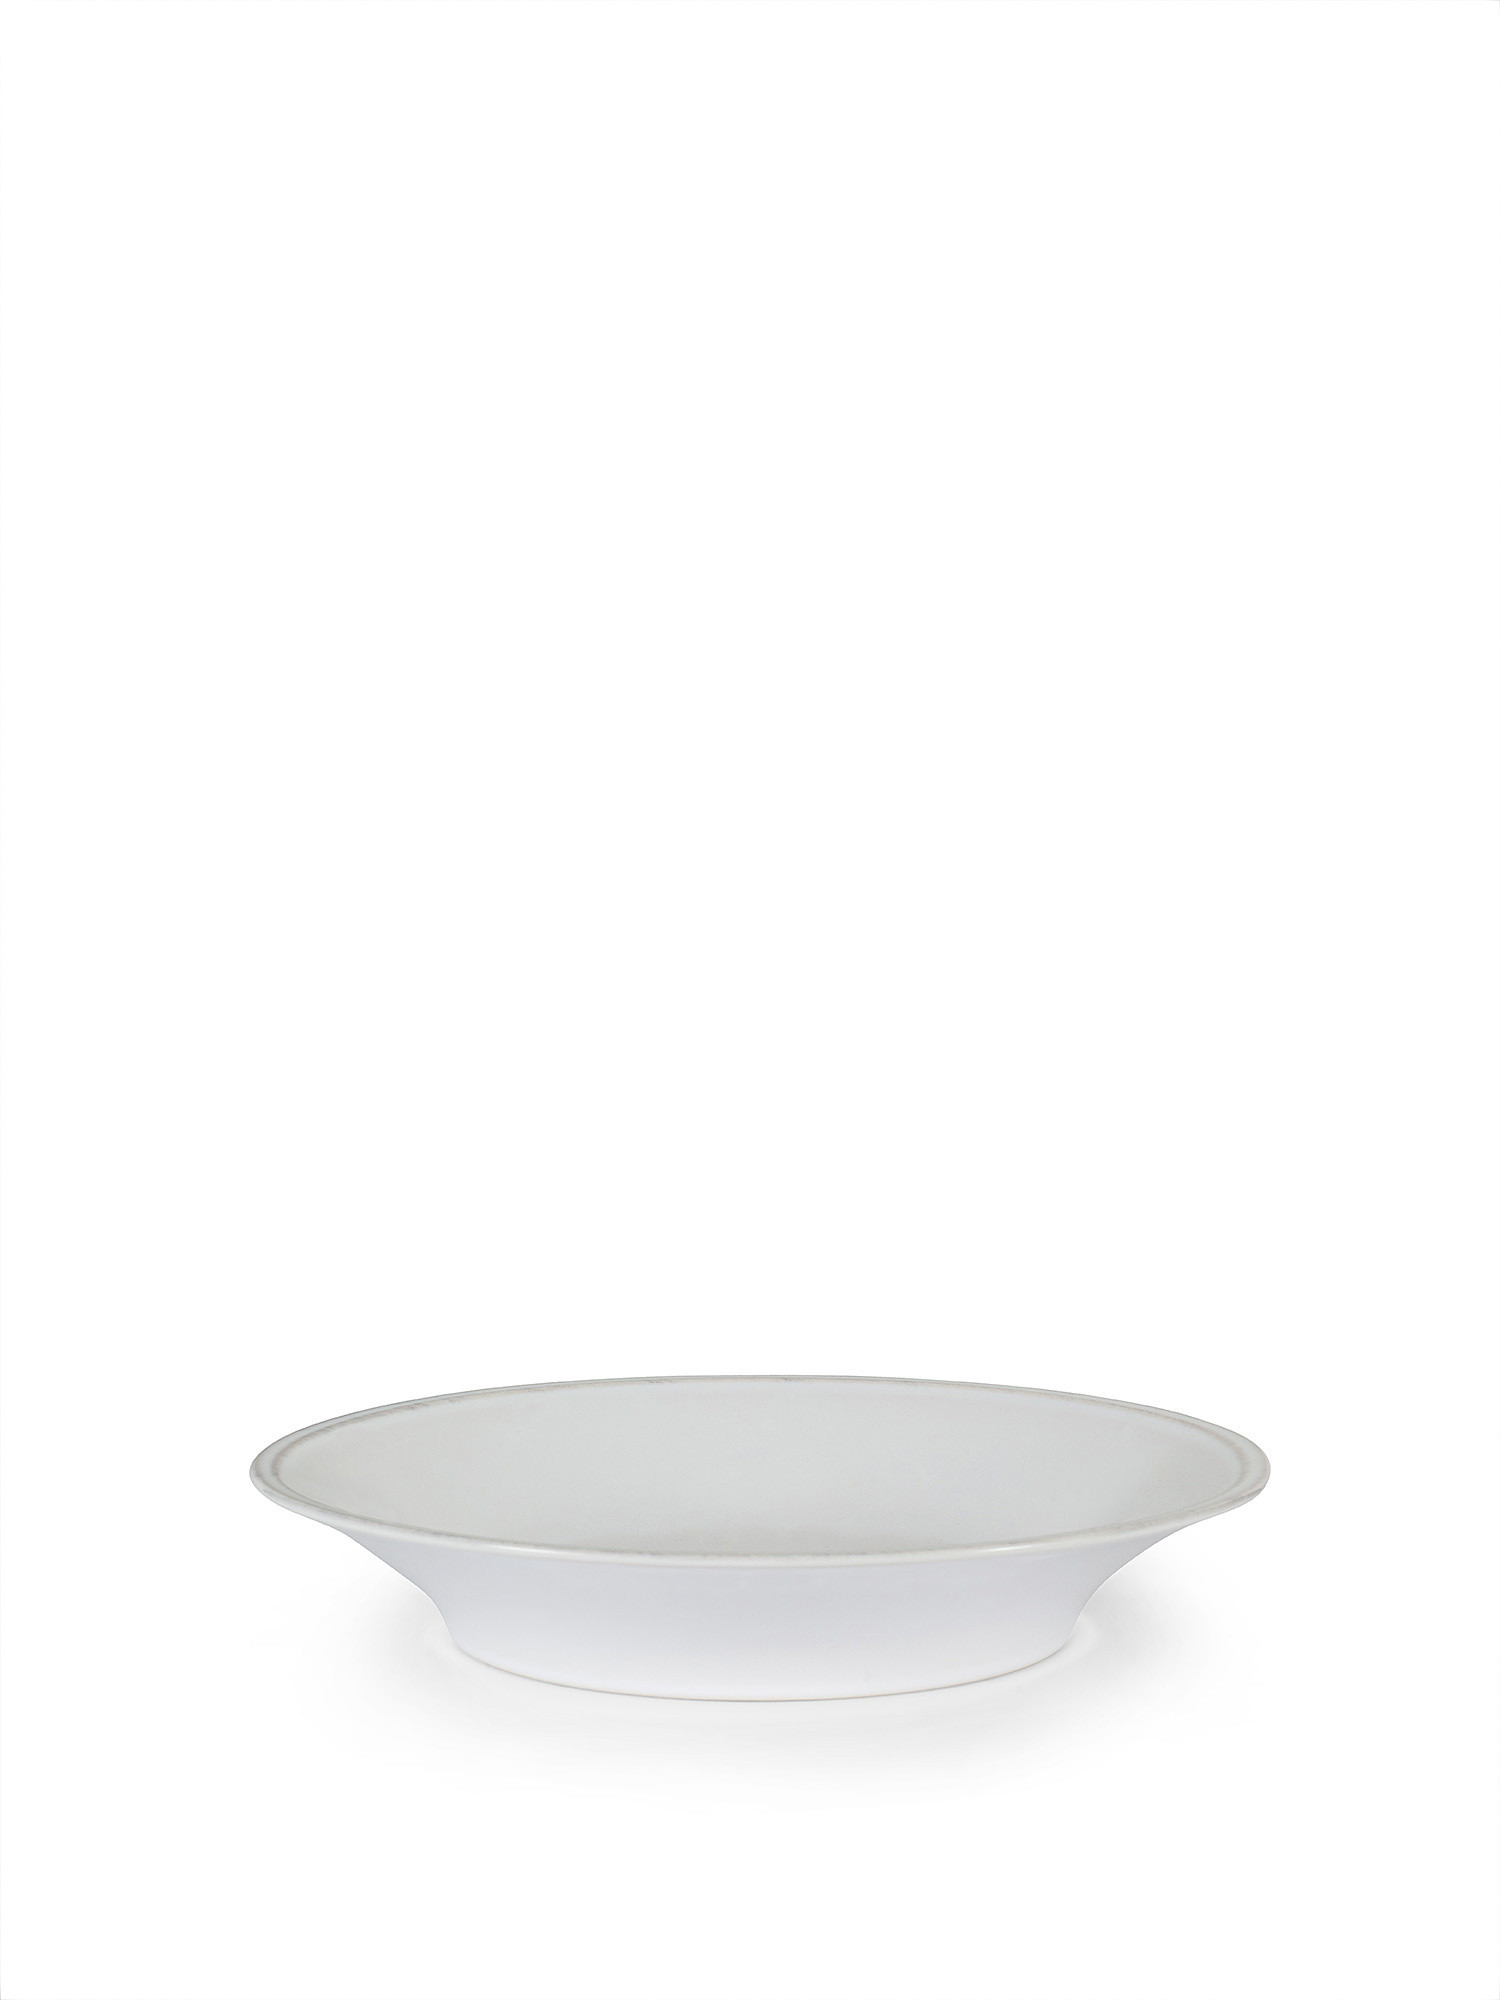 Piatto fondo ceramica Friso, Bianco, large image number 0